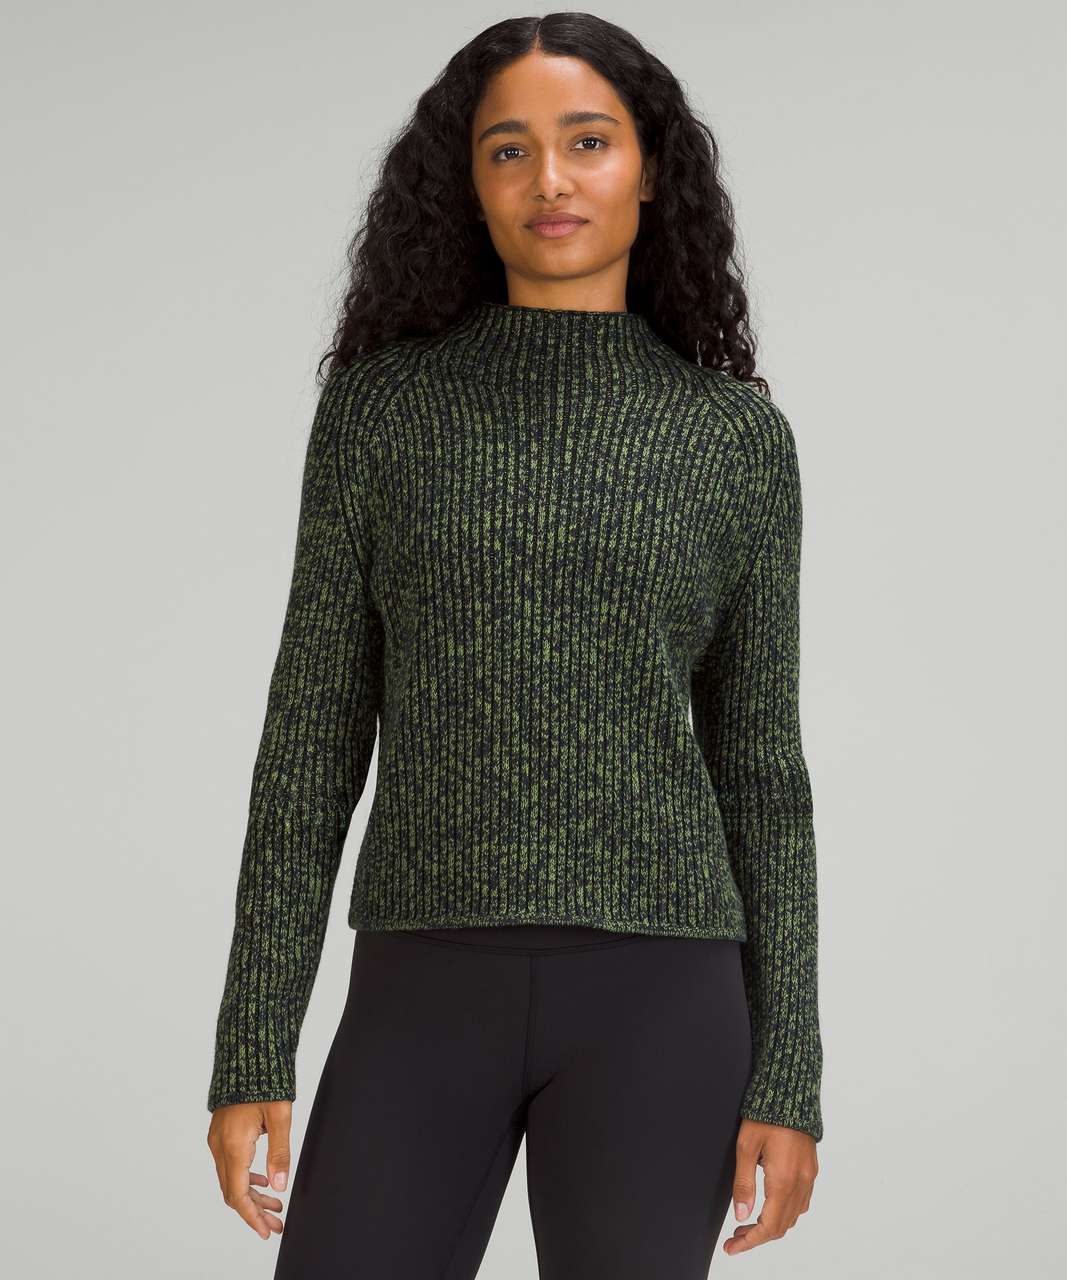 https://storage.googleapis.com/lulu-fanatics/product/77507/1280/lululemon-cotton-cashmere-blend-mock-neck-sweater-green-foliage-true-navy-black-granite-black-058355-412628.jpg